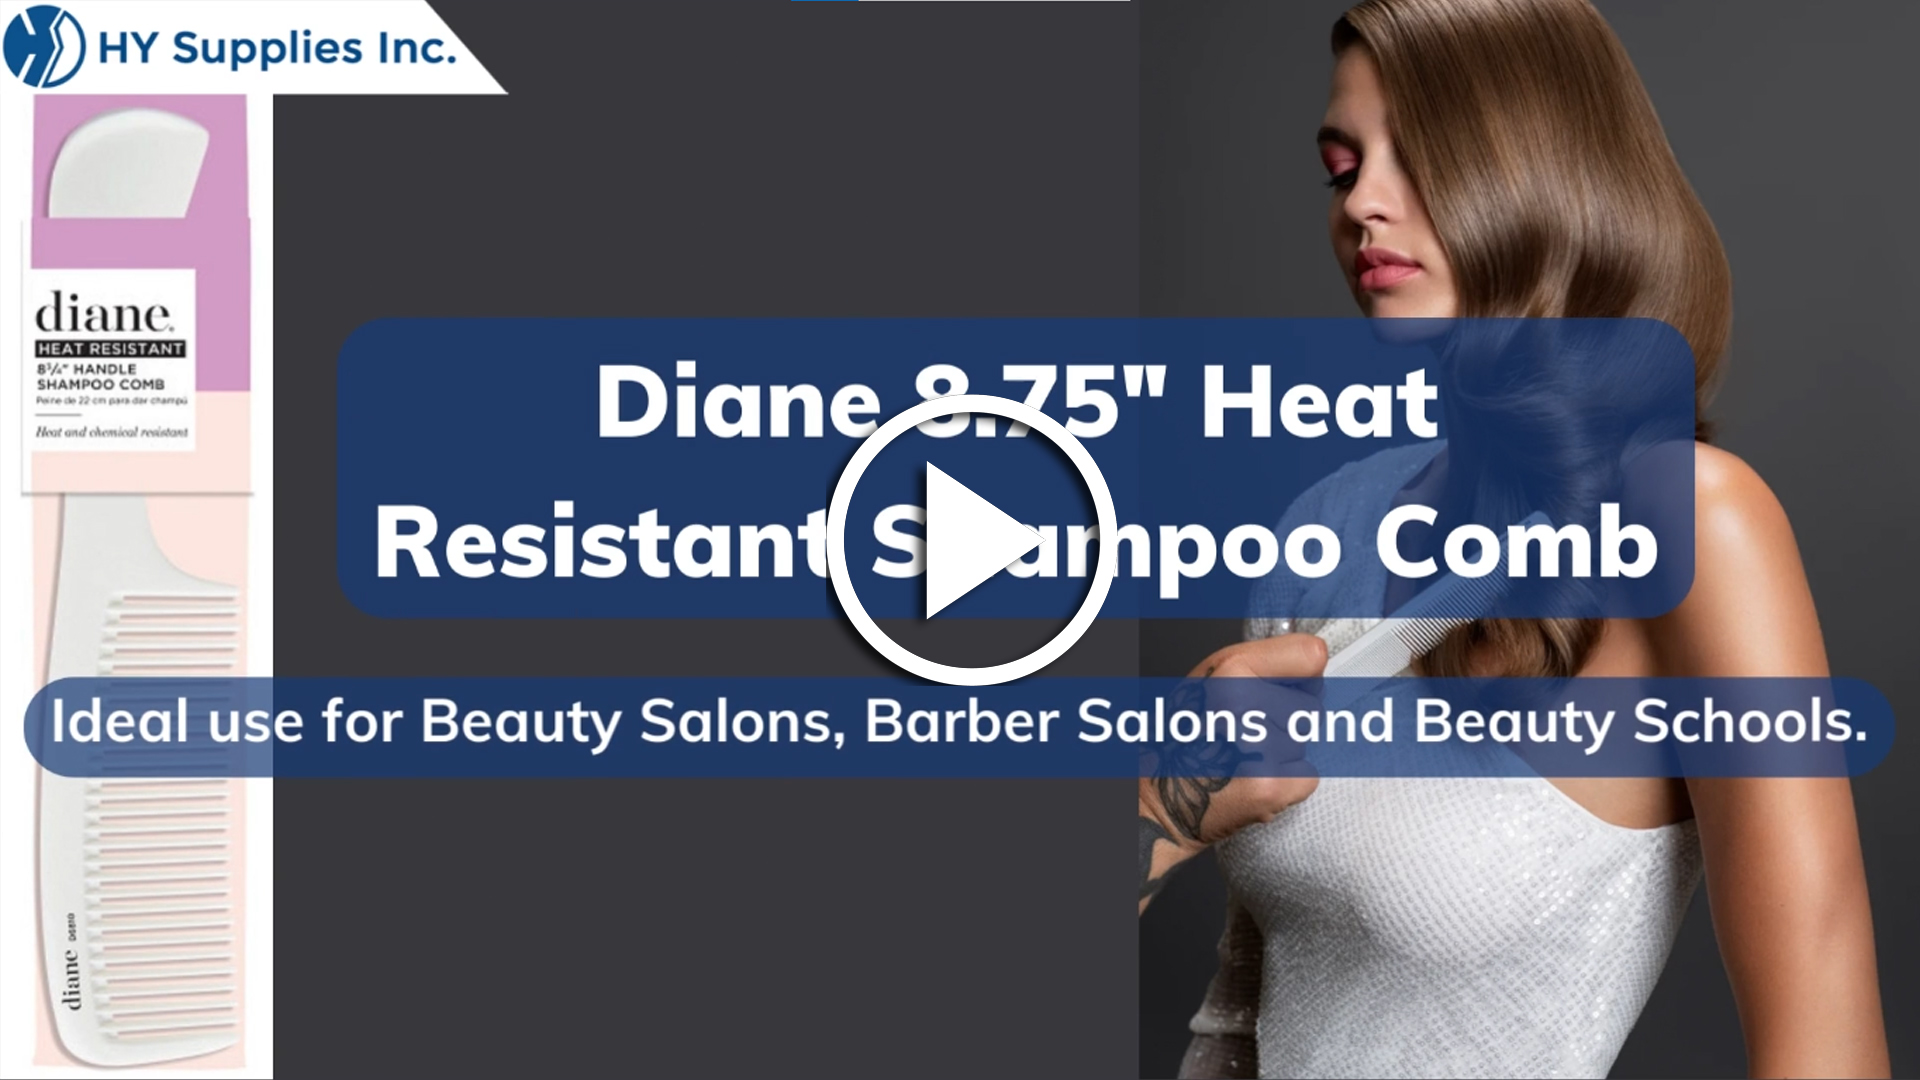 Diane 8.75" Heat Resistant Shampoo Comb